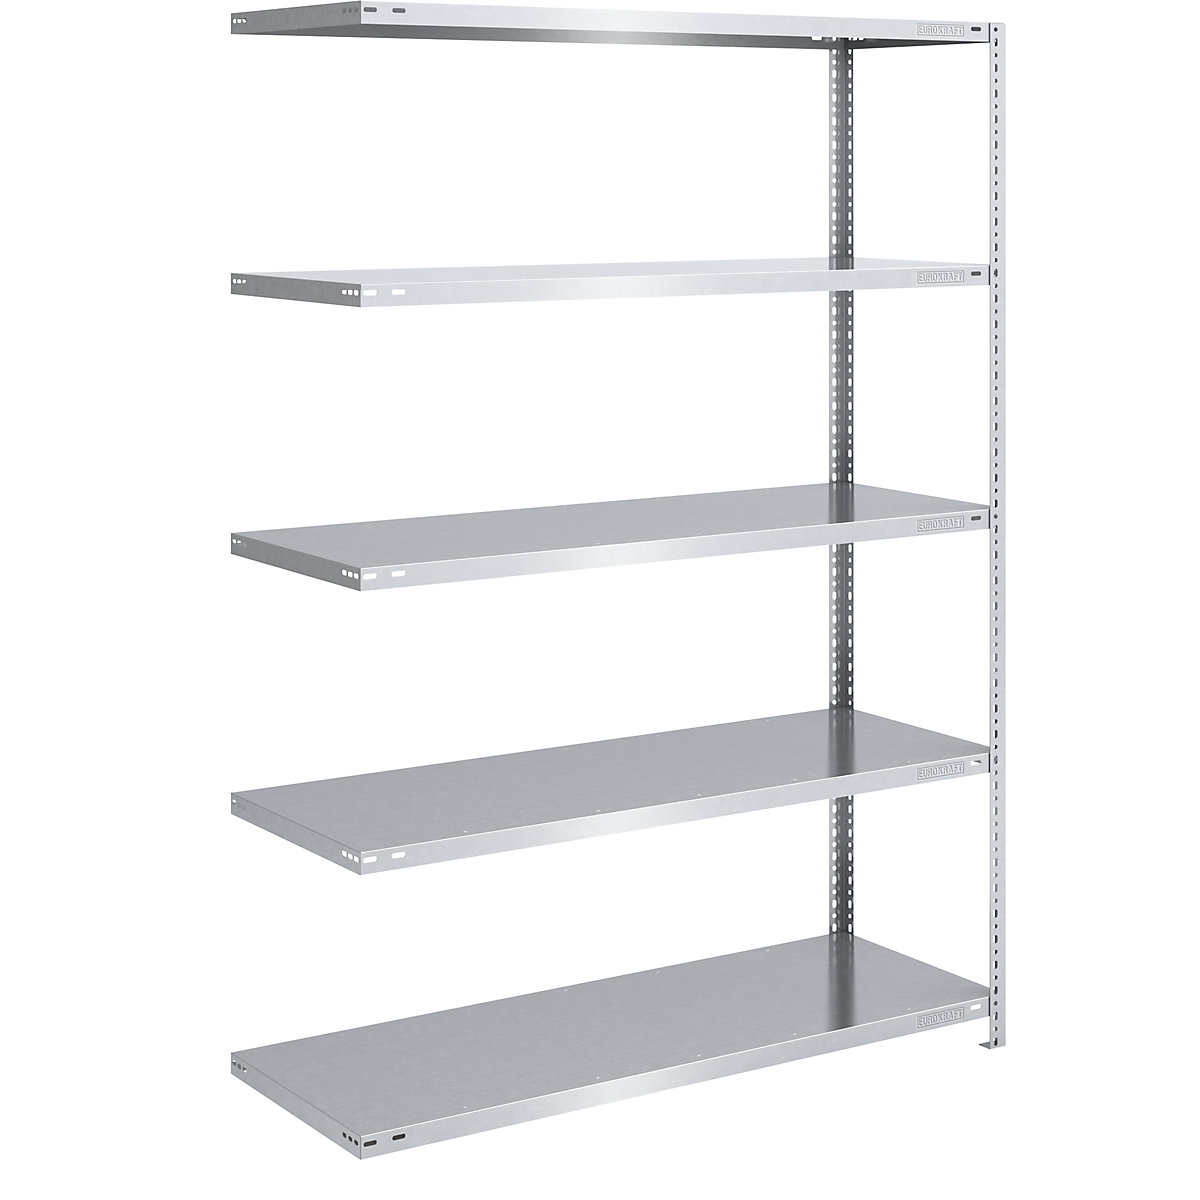 Bolt-together shelf unit, light duty, zinc plated – eurokraft pro, shelf unit height 2000 mm, shelf width 1300 mm, depth 600 mm, extension shelf unit-11